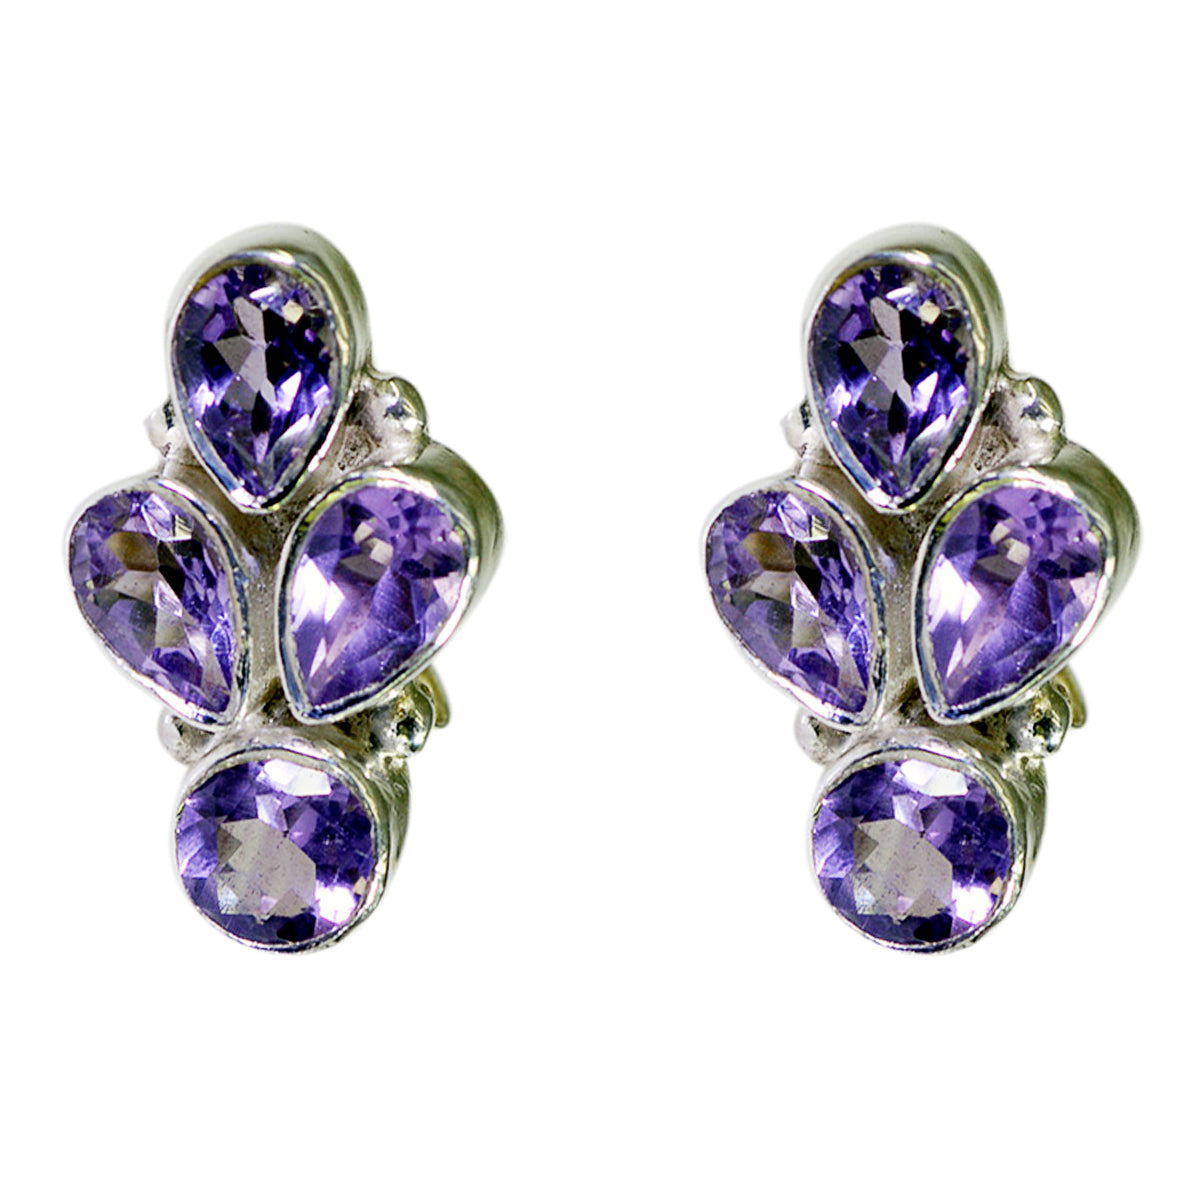 Riyo Real Gemstones multi shape Faceted Purple Amethyst Silver Earring st. patricks day gift